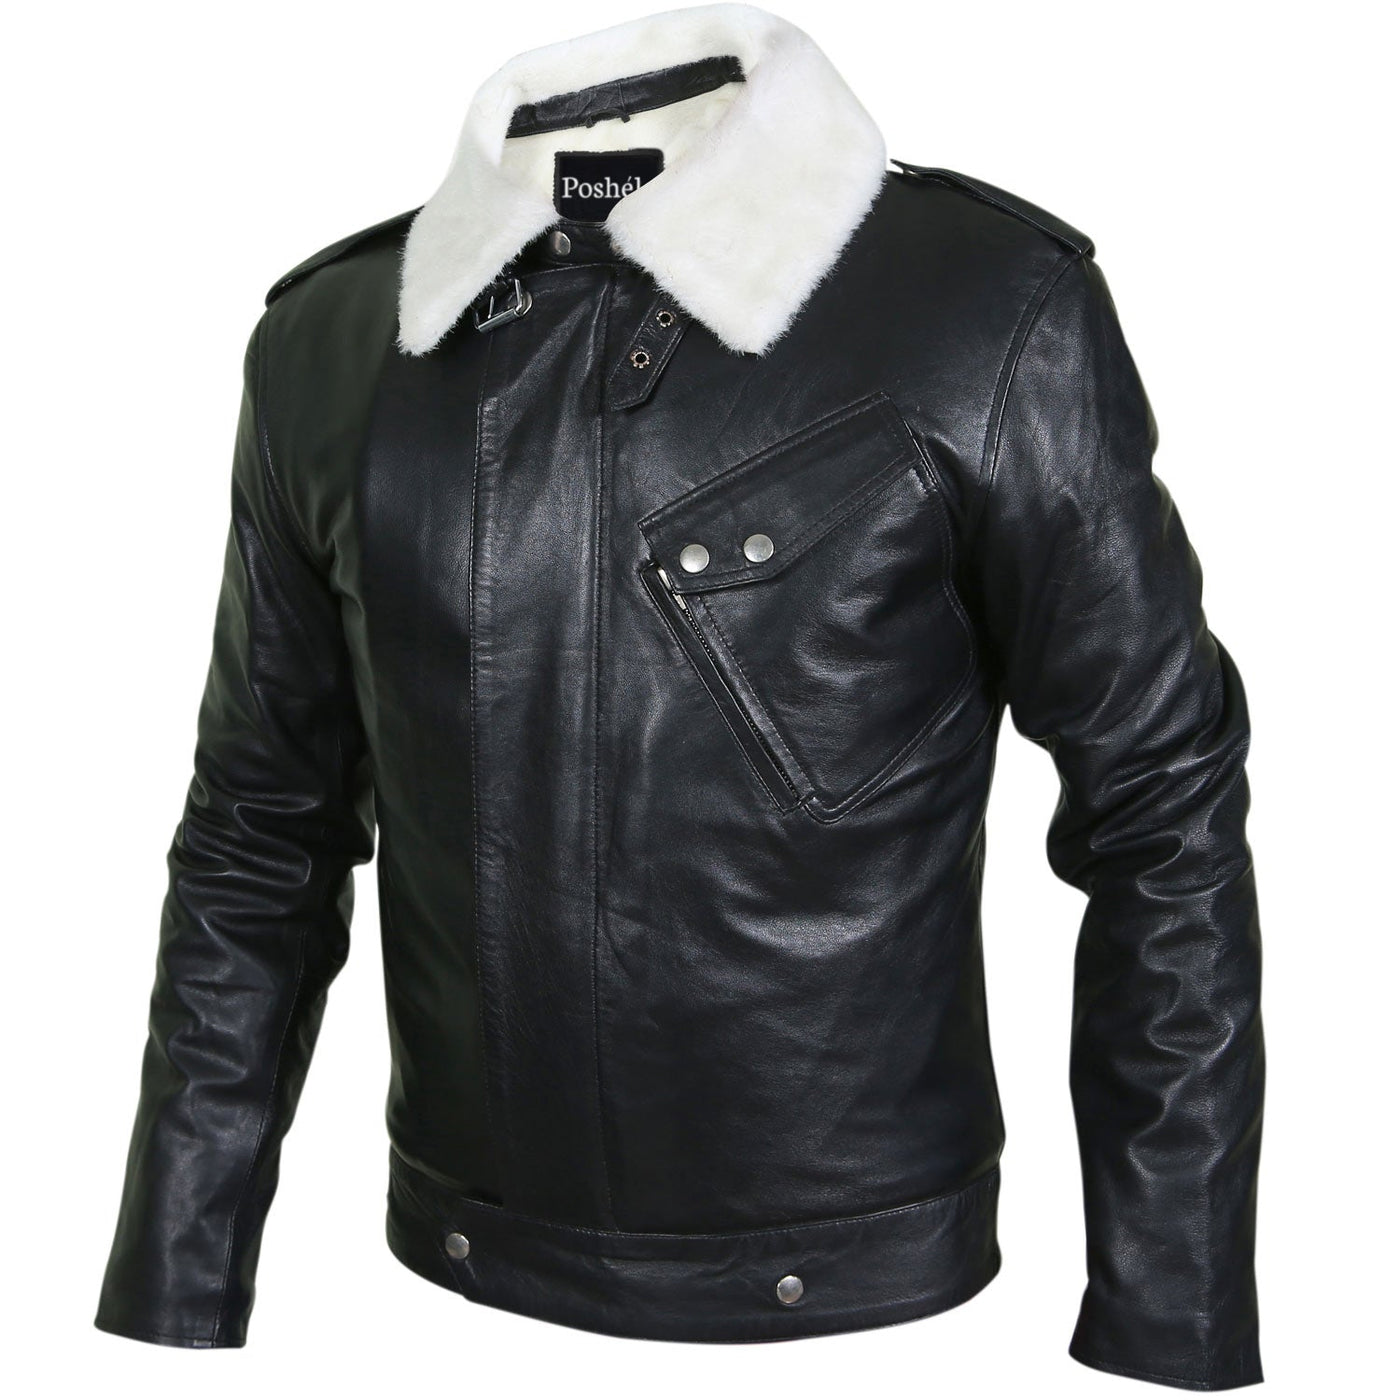 Dale White Leather Biker Jacket